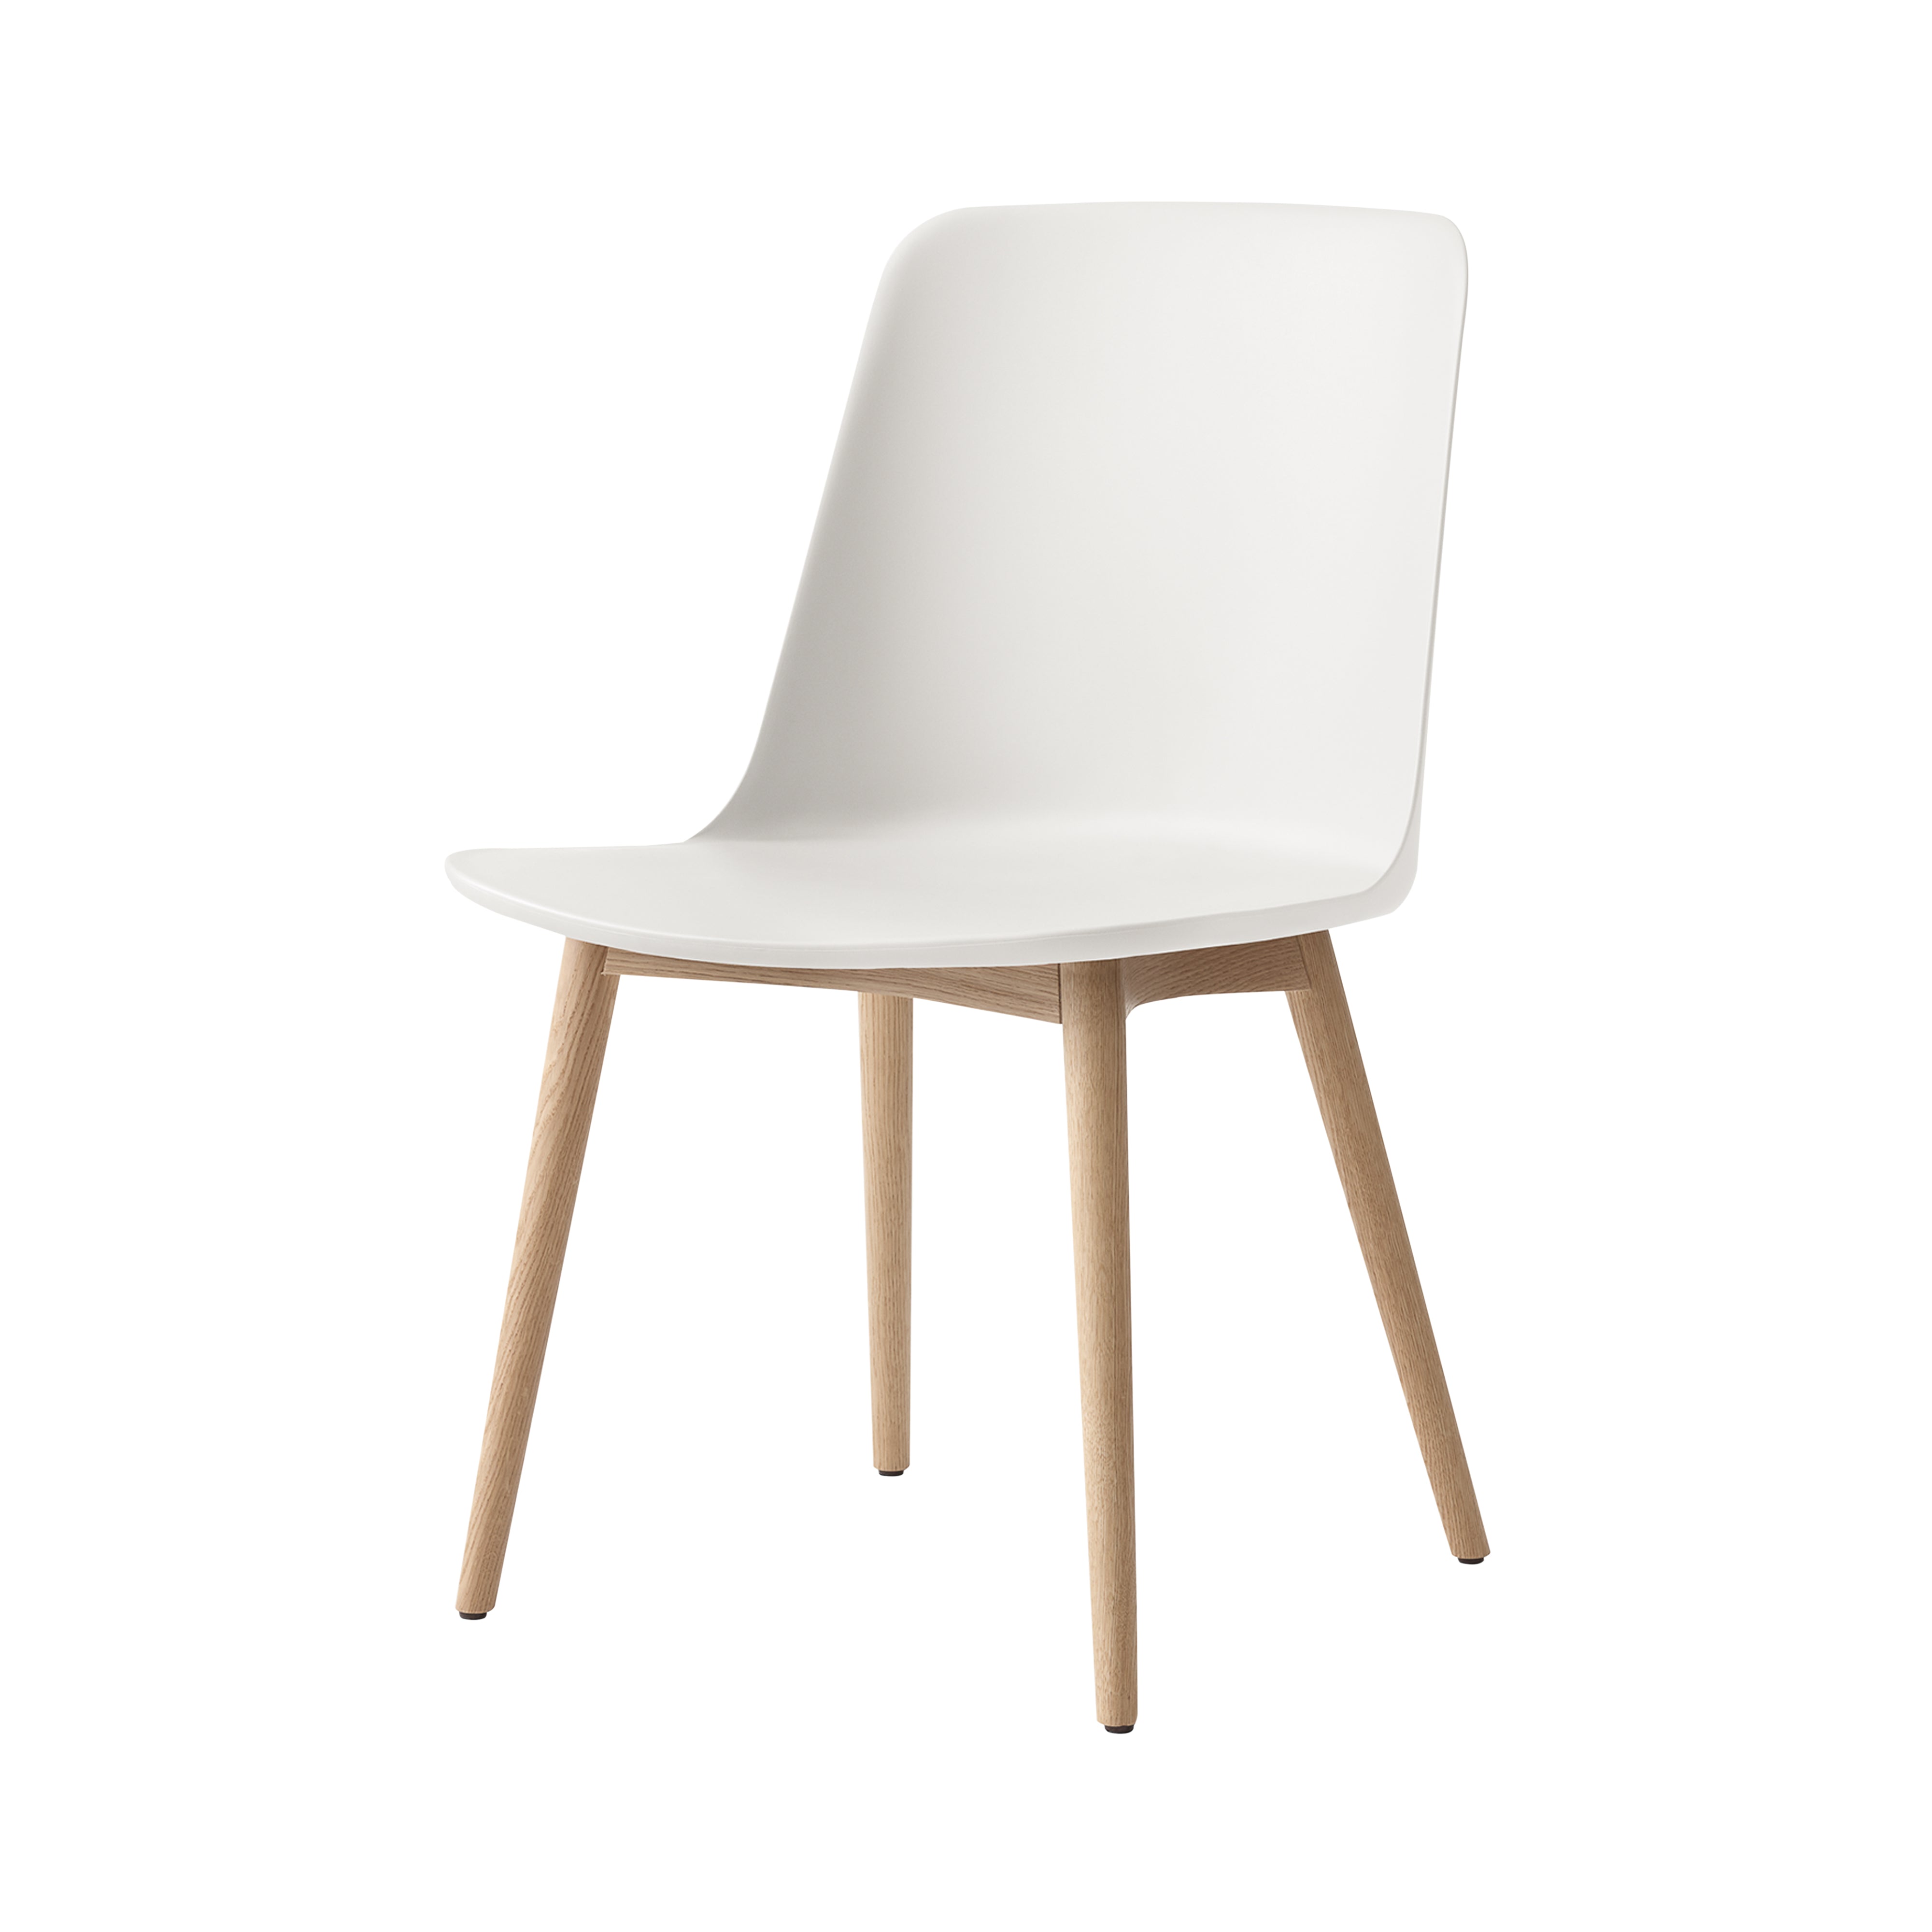 Rely Chair HW71: Oak + White